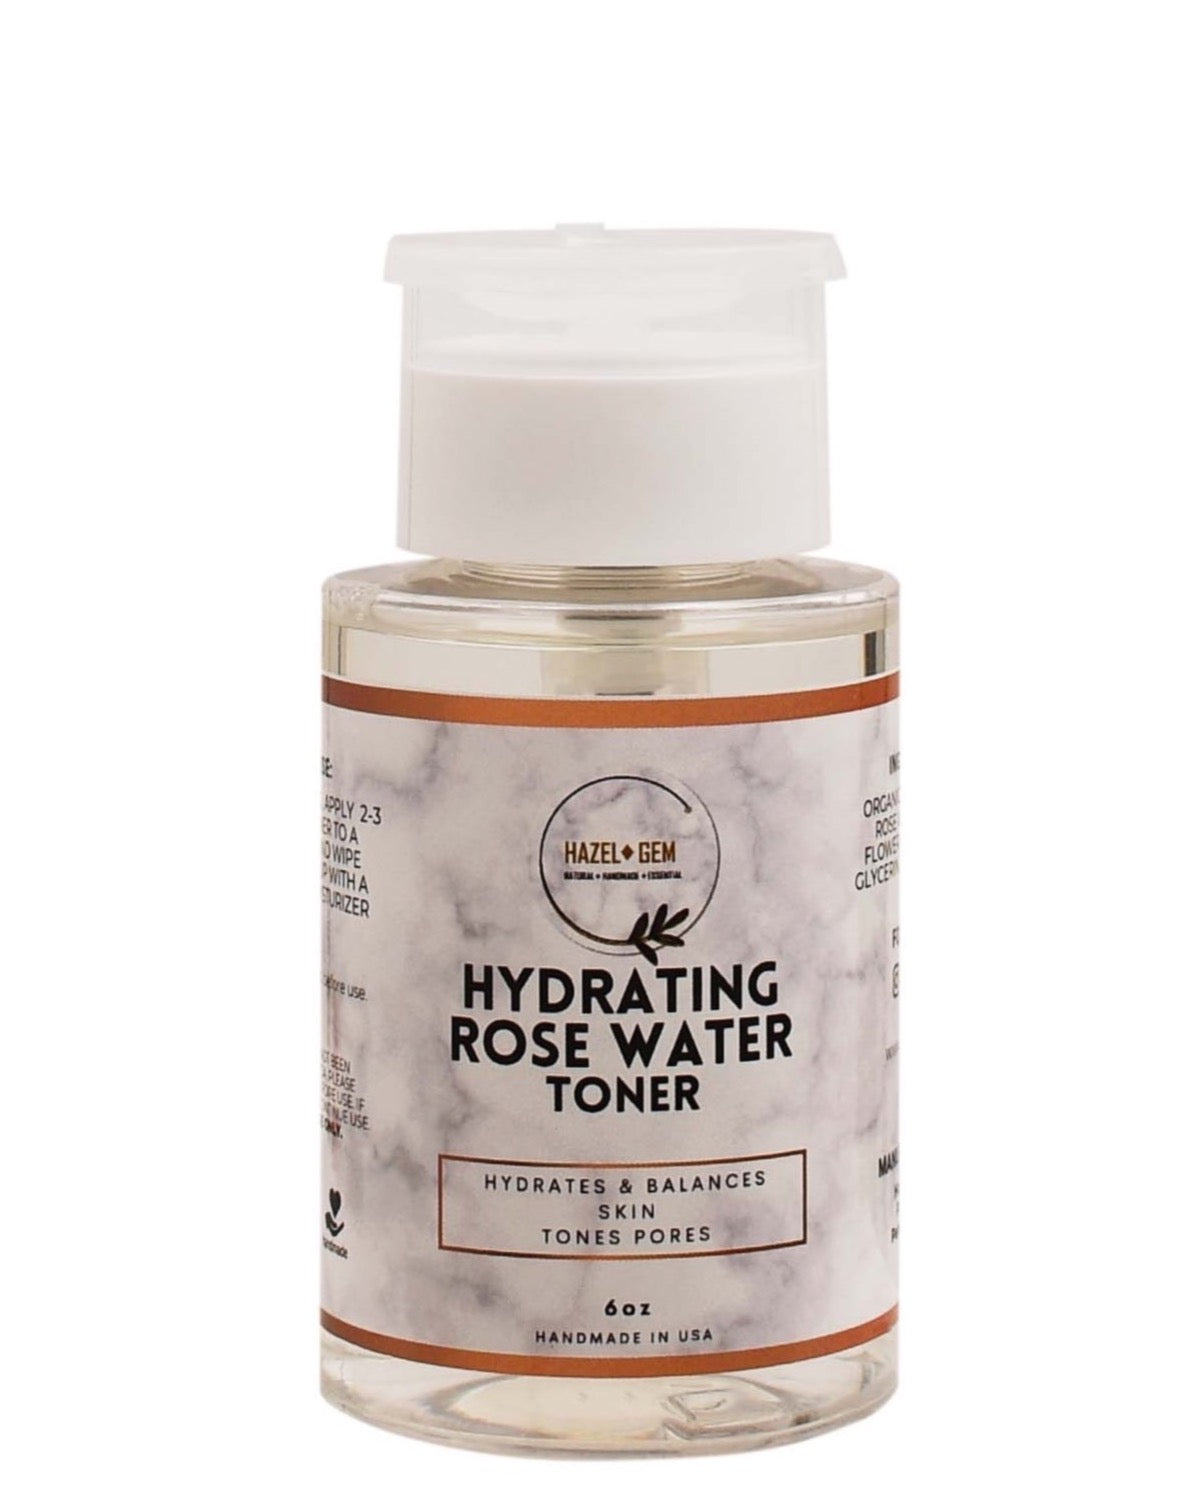 Hydrating Rose Water Toner